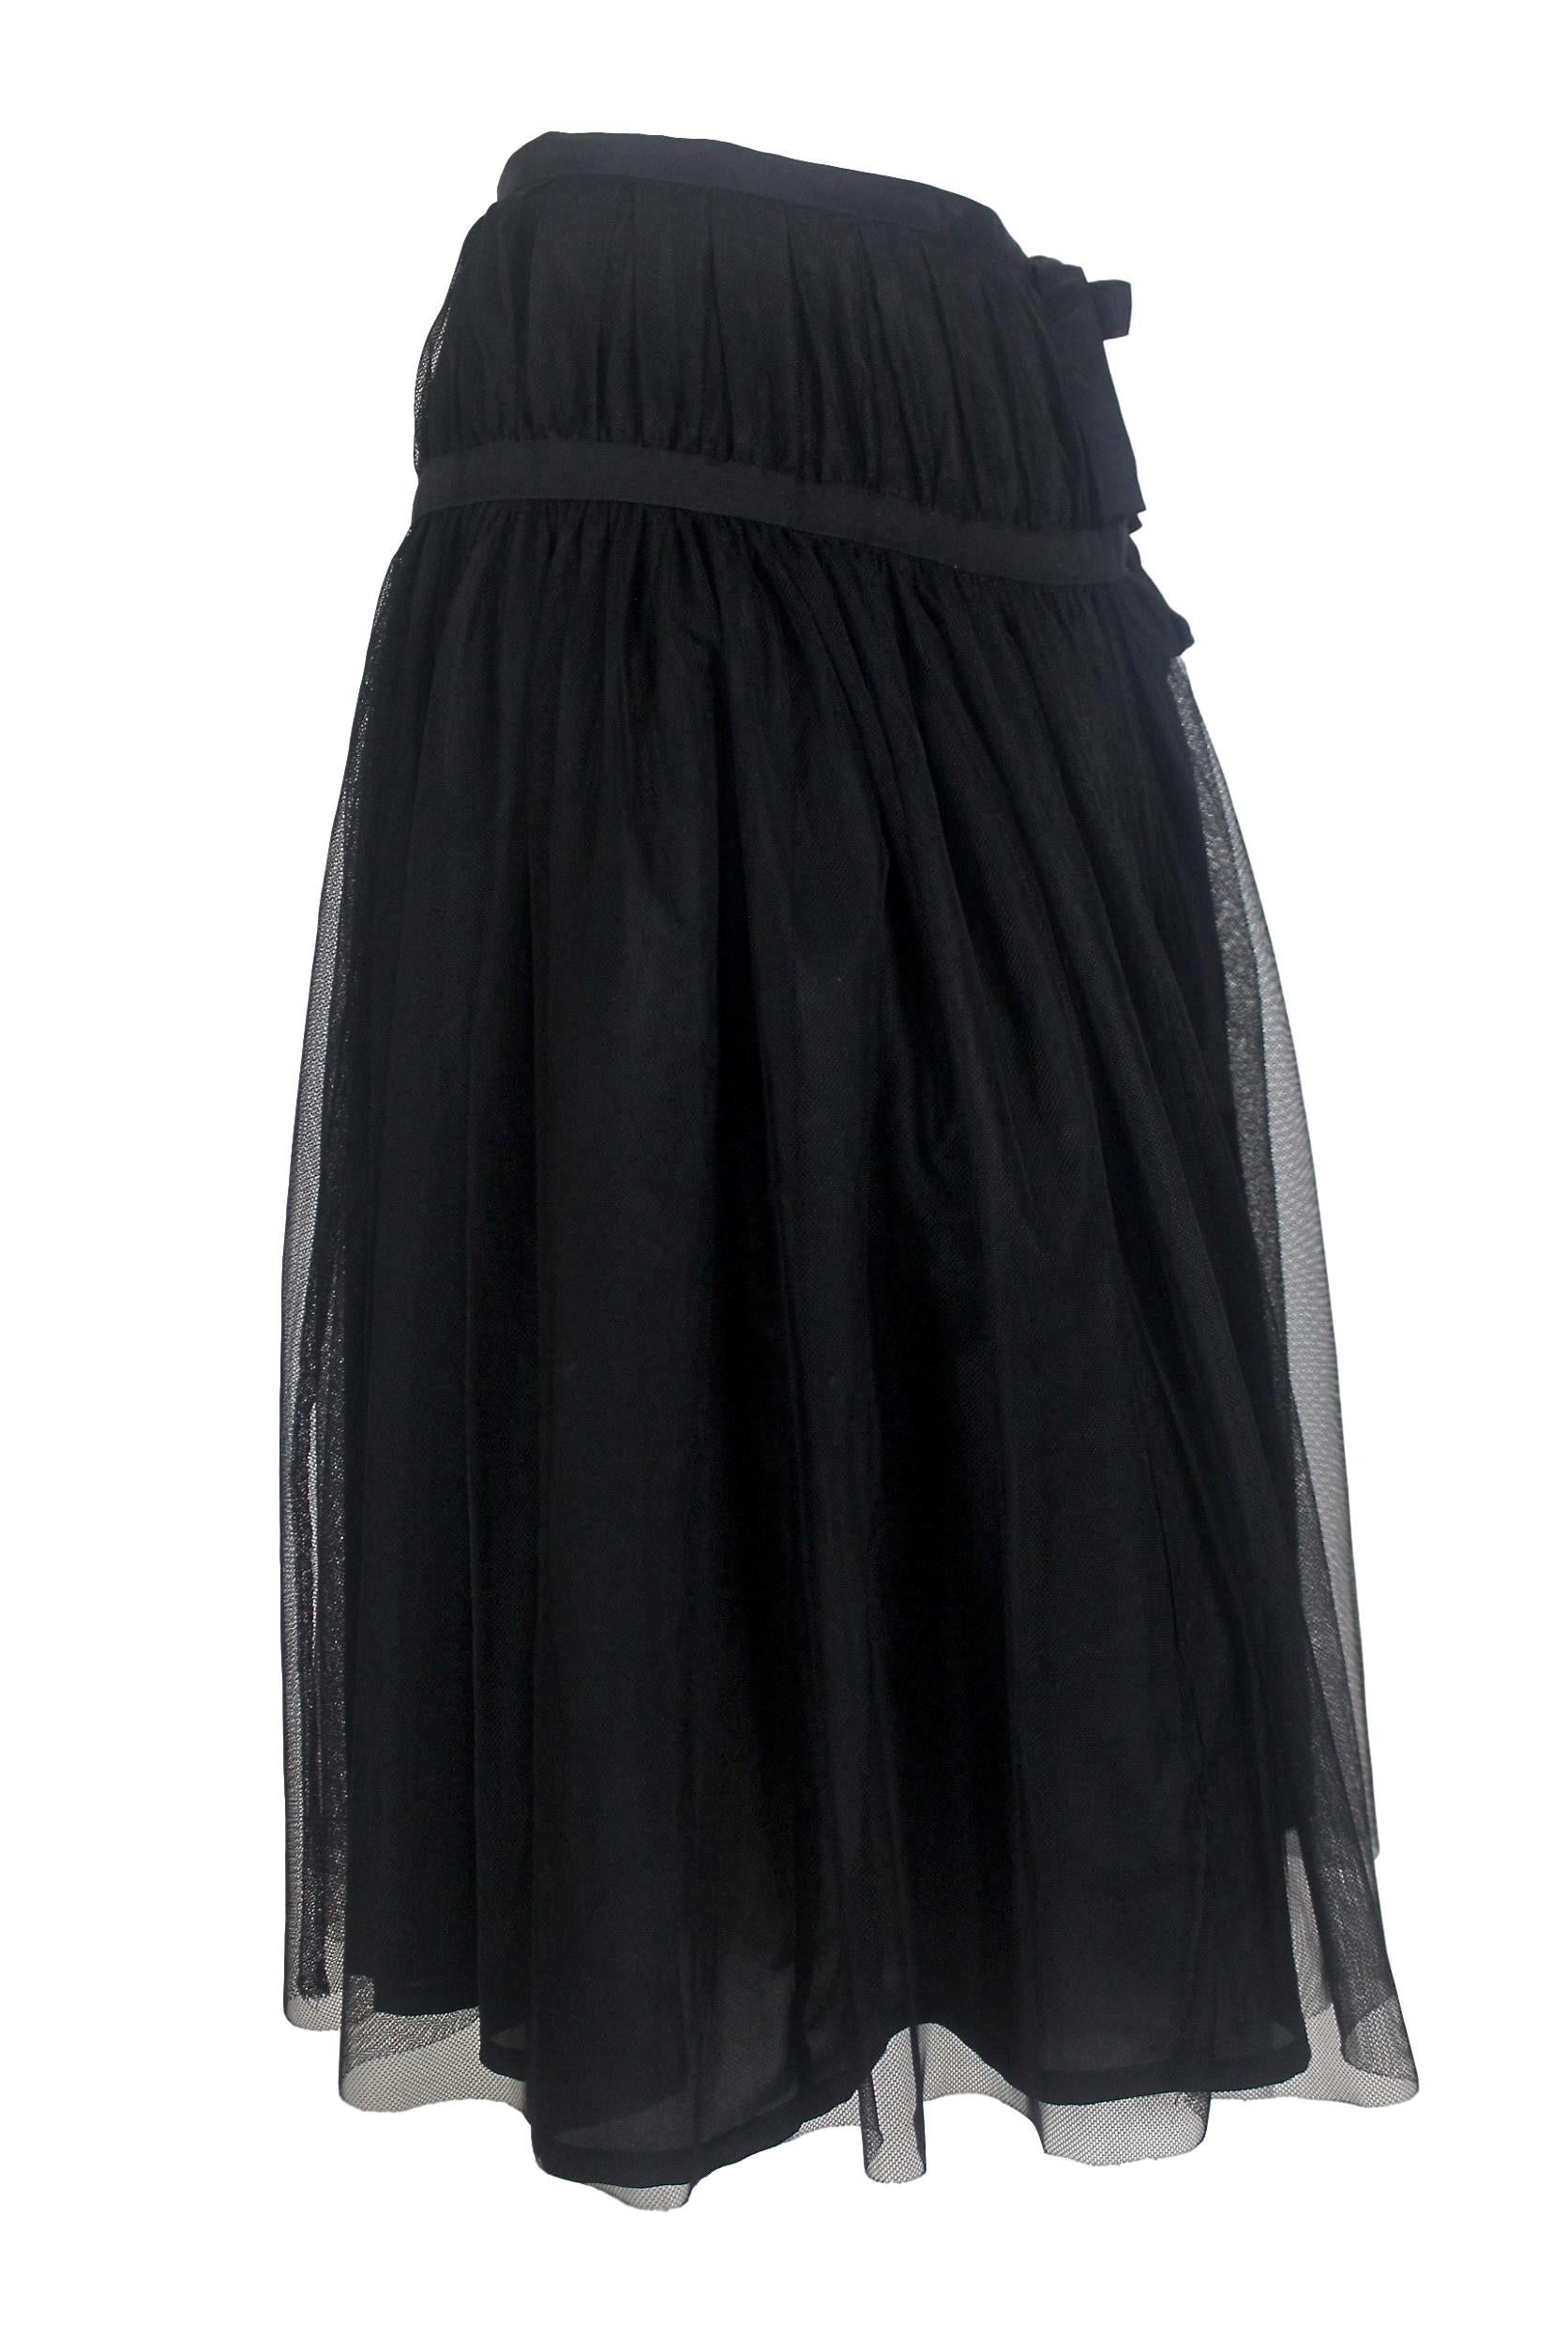 Comme des Garcons Tricot Double Layer Wrap Skirt 2007 For Sale 5